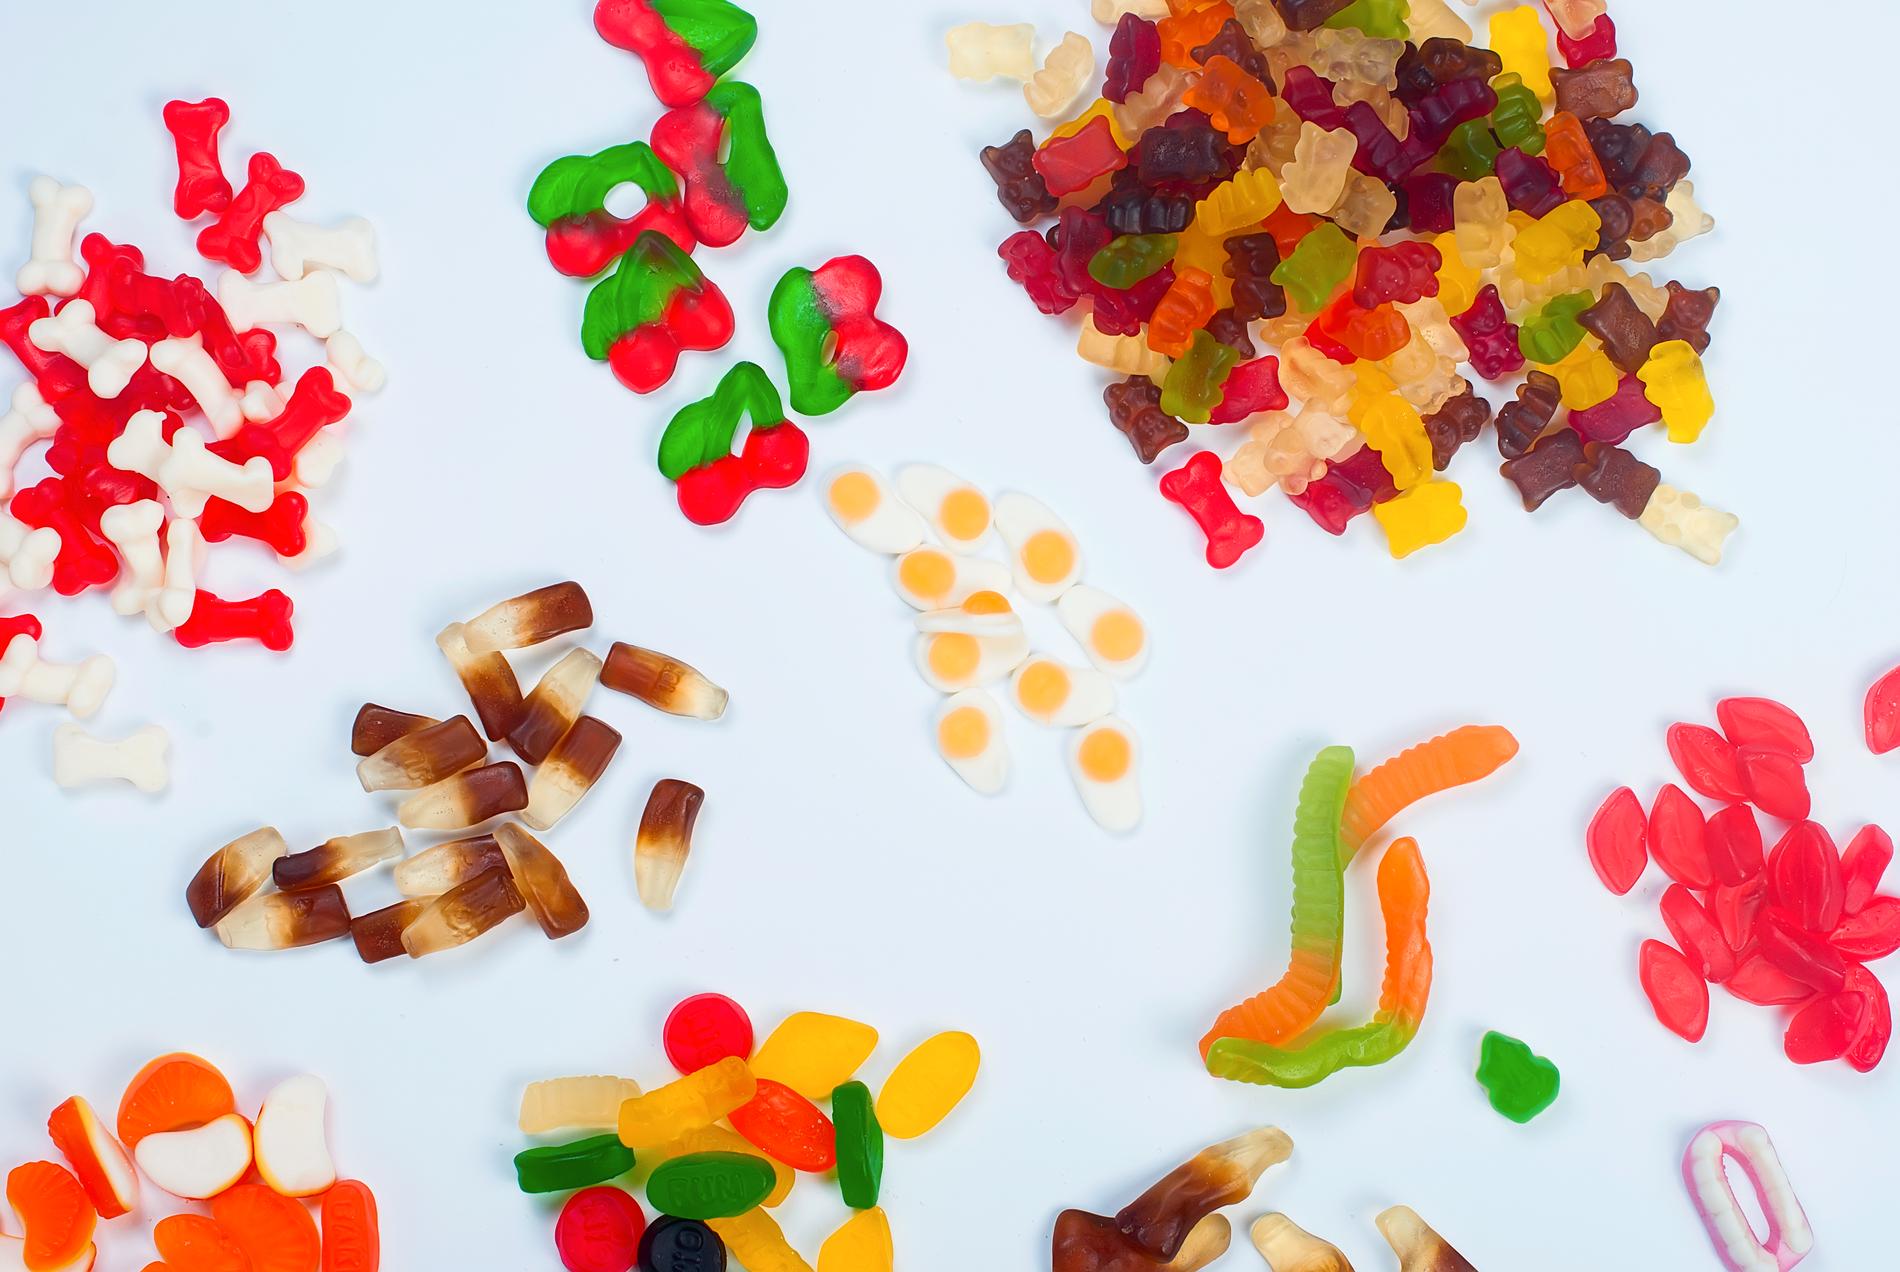 I sommar öppnar godiskedjan Candy factory upp ett godismuseum i New York.